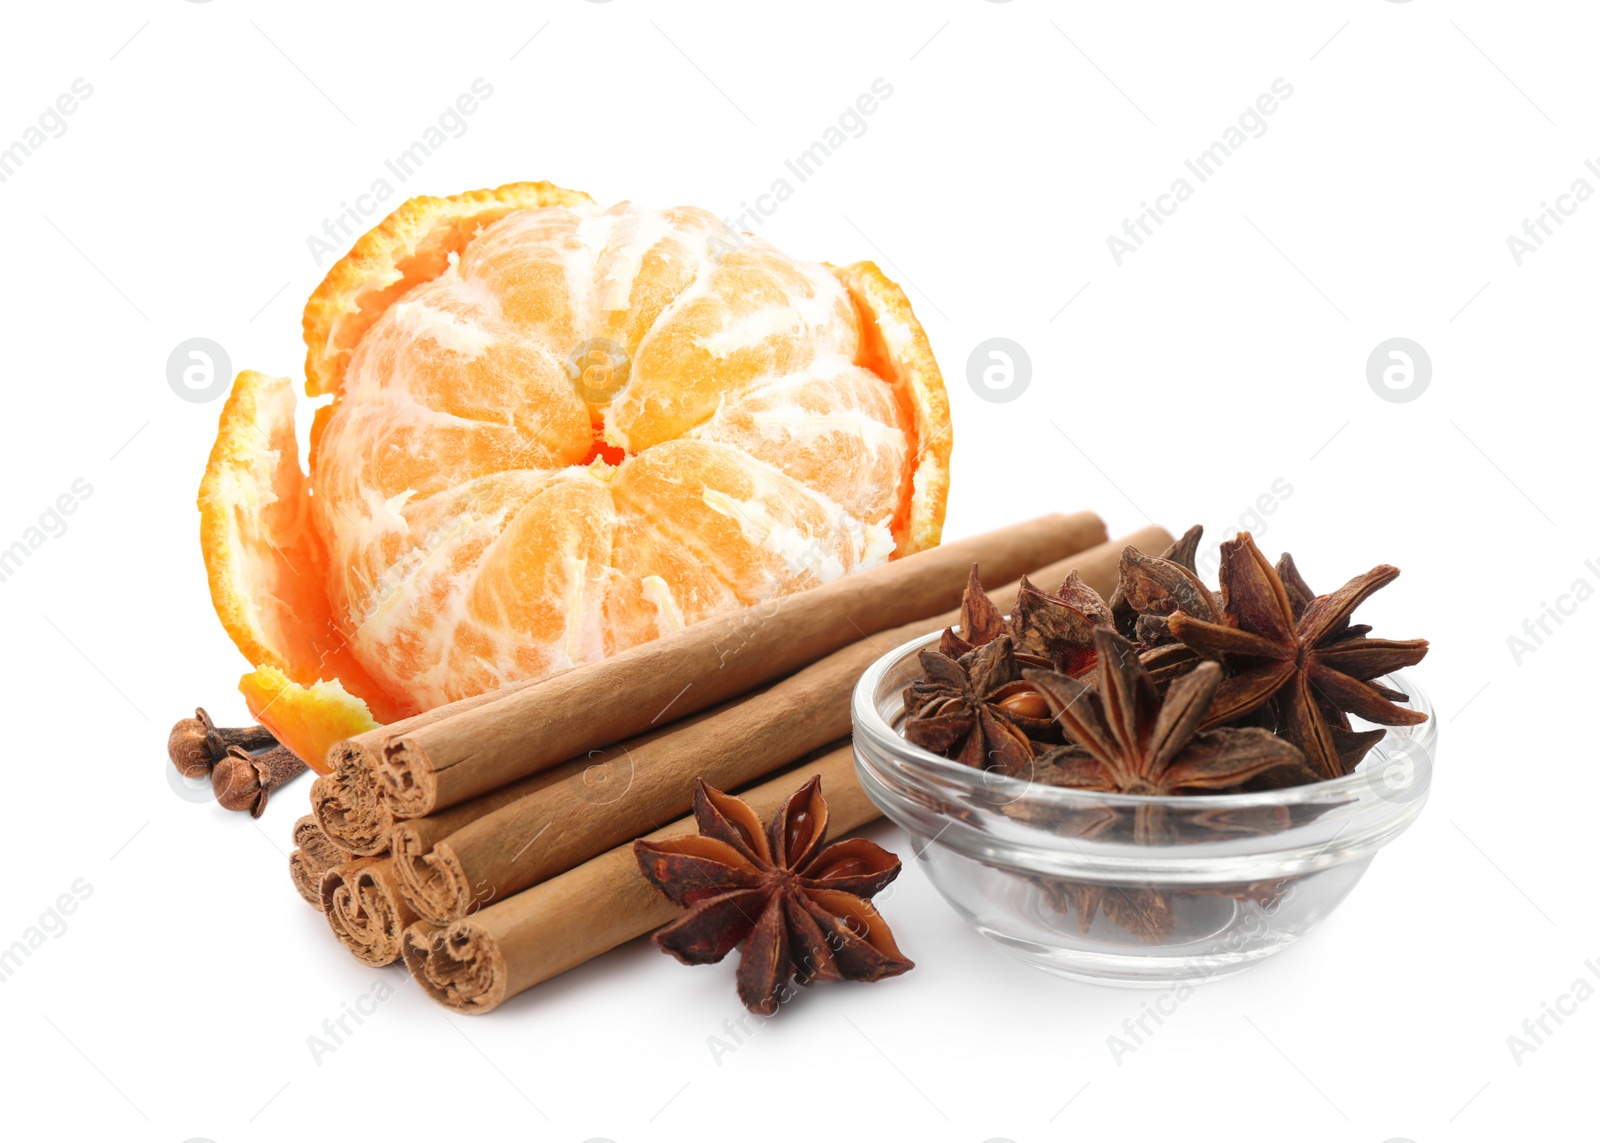 Image of Fresh ripe tangerine, cloves, anises and cinnamon on white background